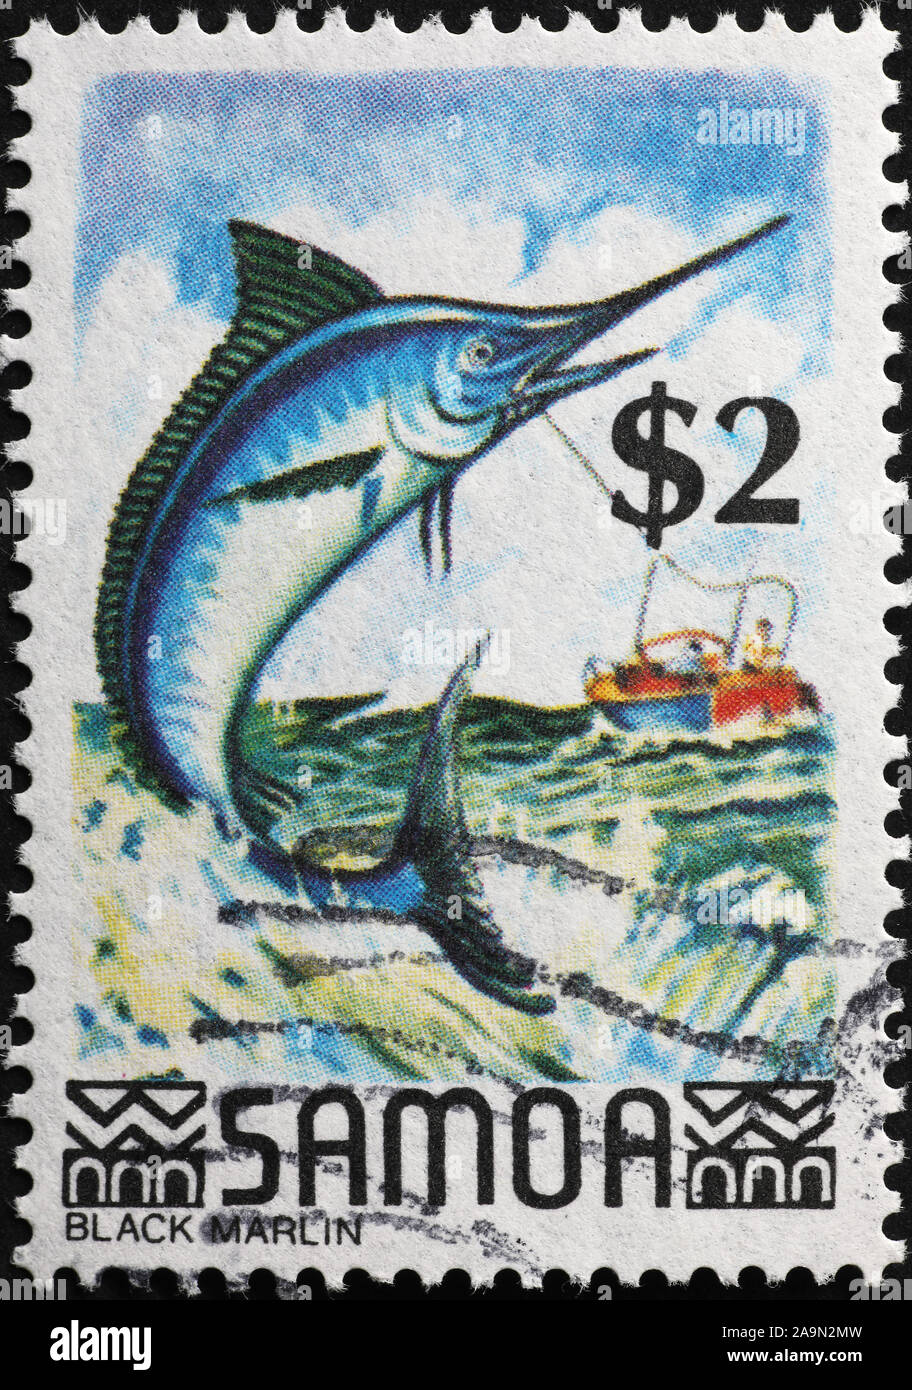 Black marlin on samoan postage stamp Stock Photo